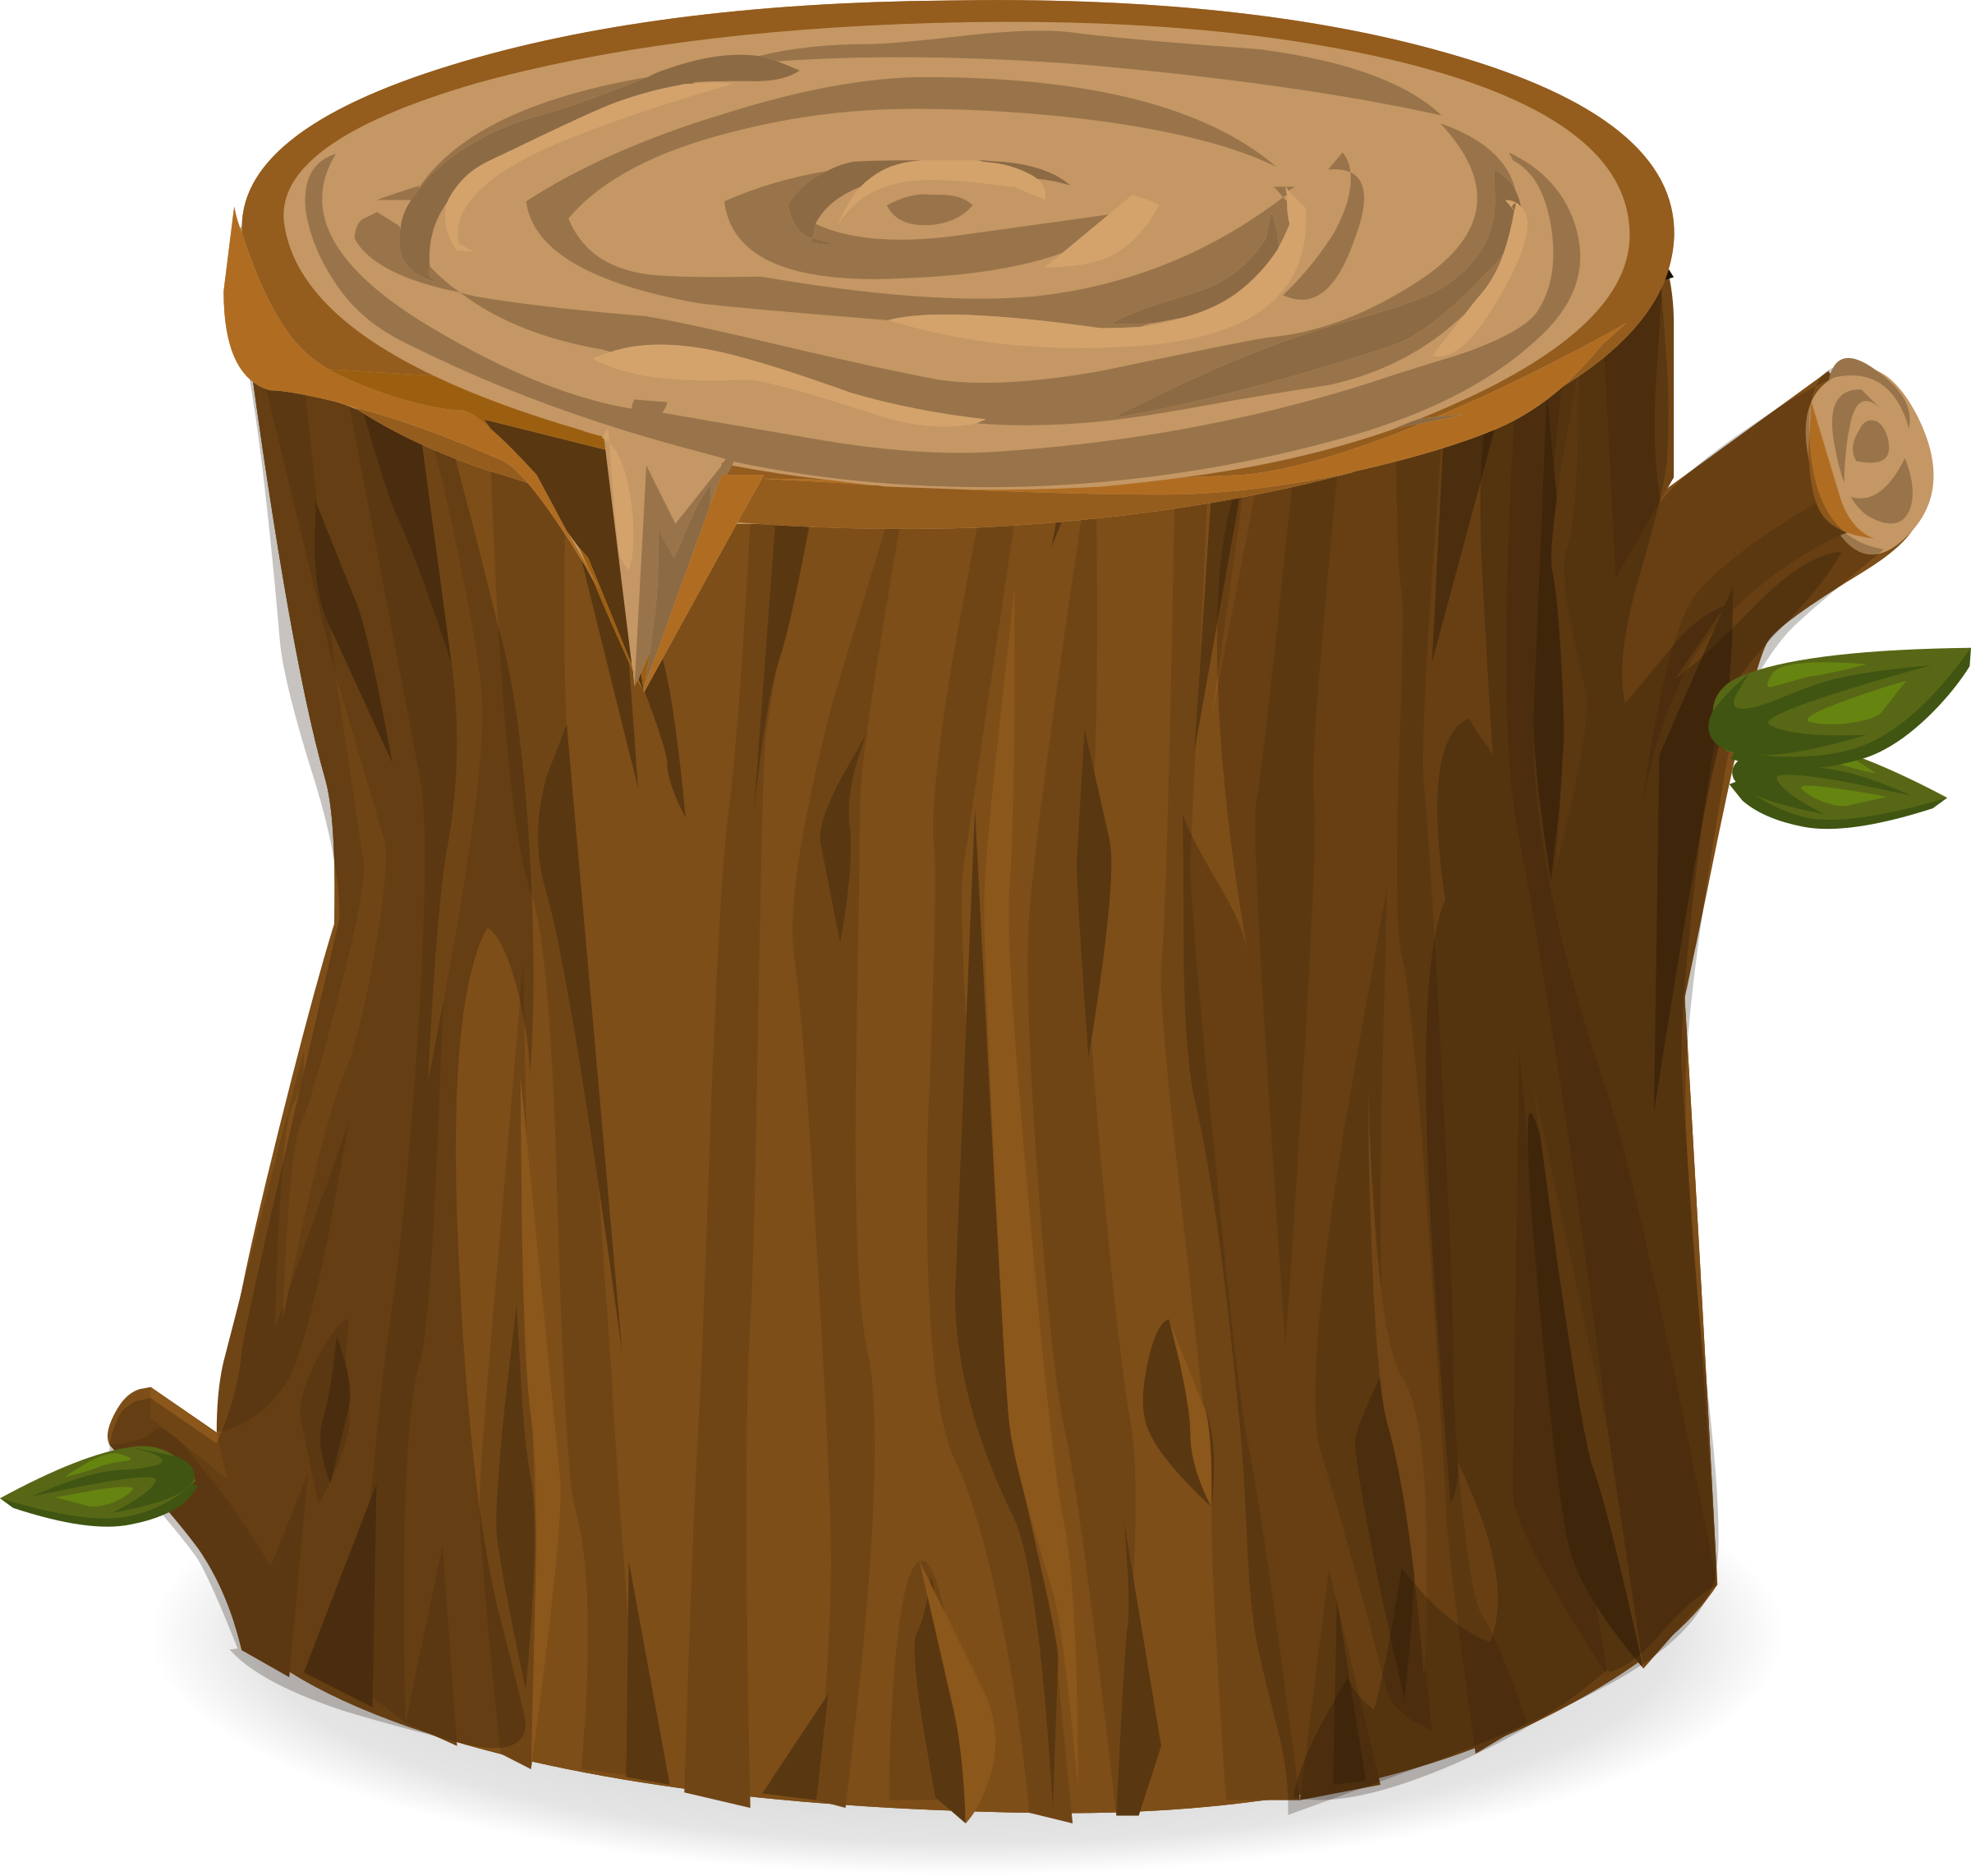 Logs clipart stump, Logs stump Transparent FREE for download on